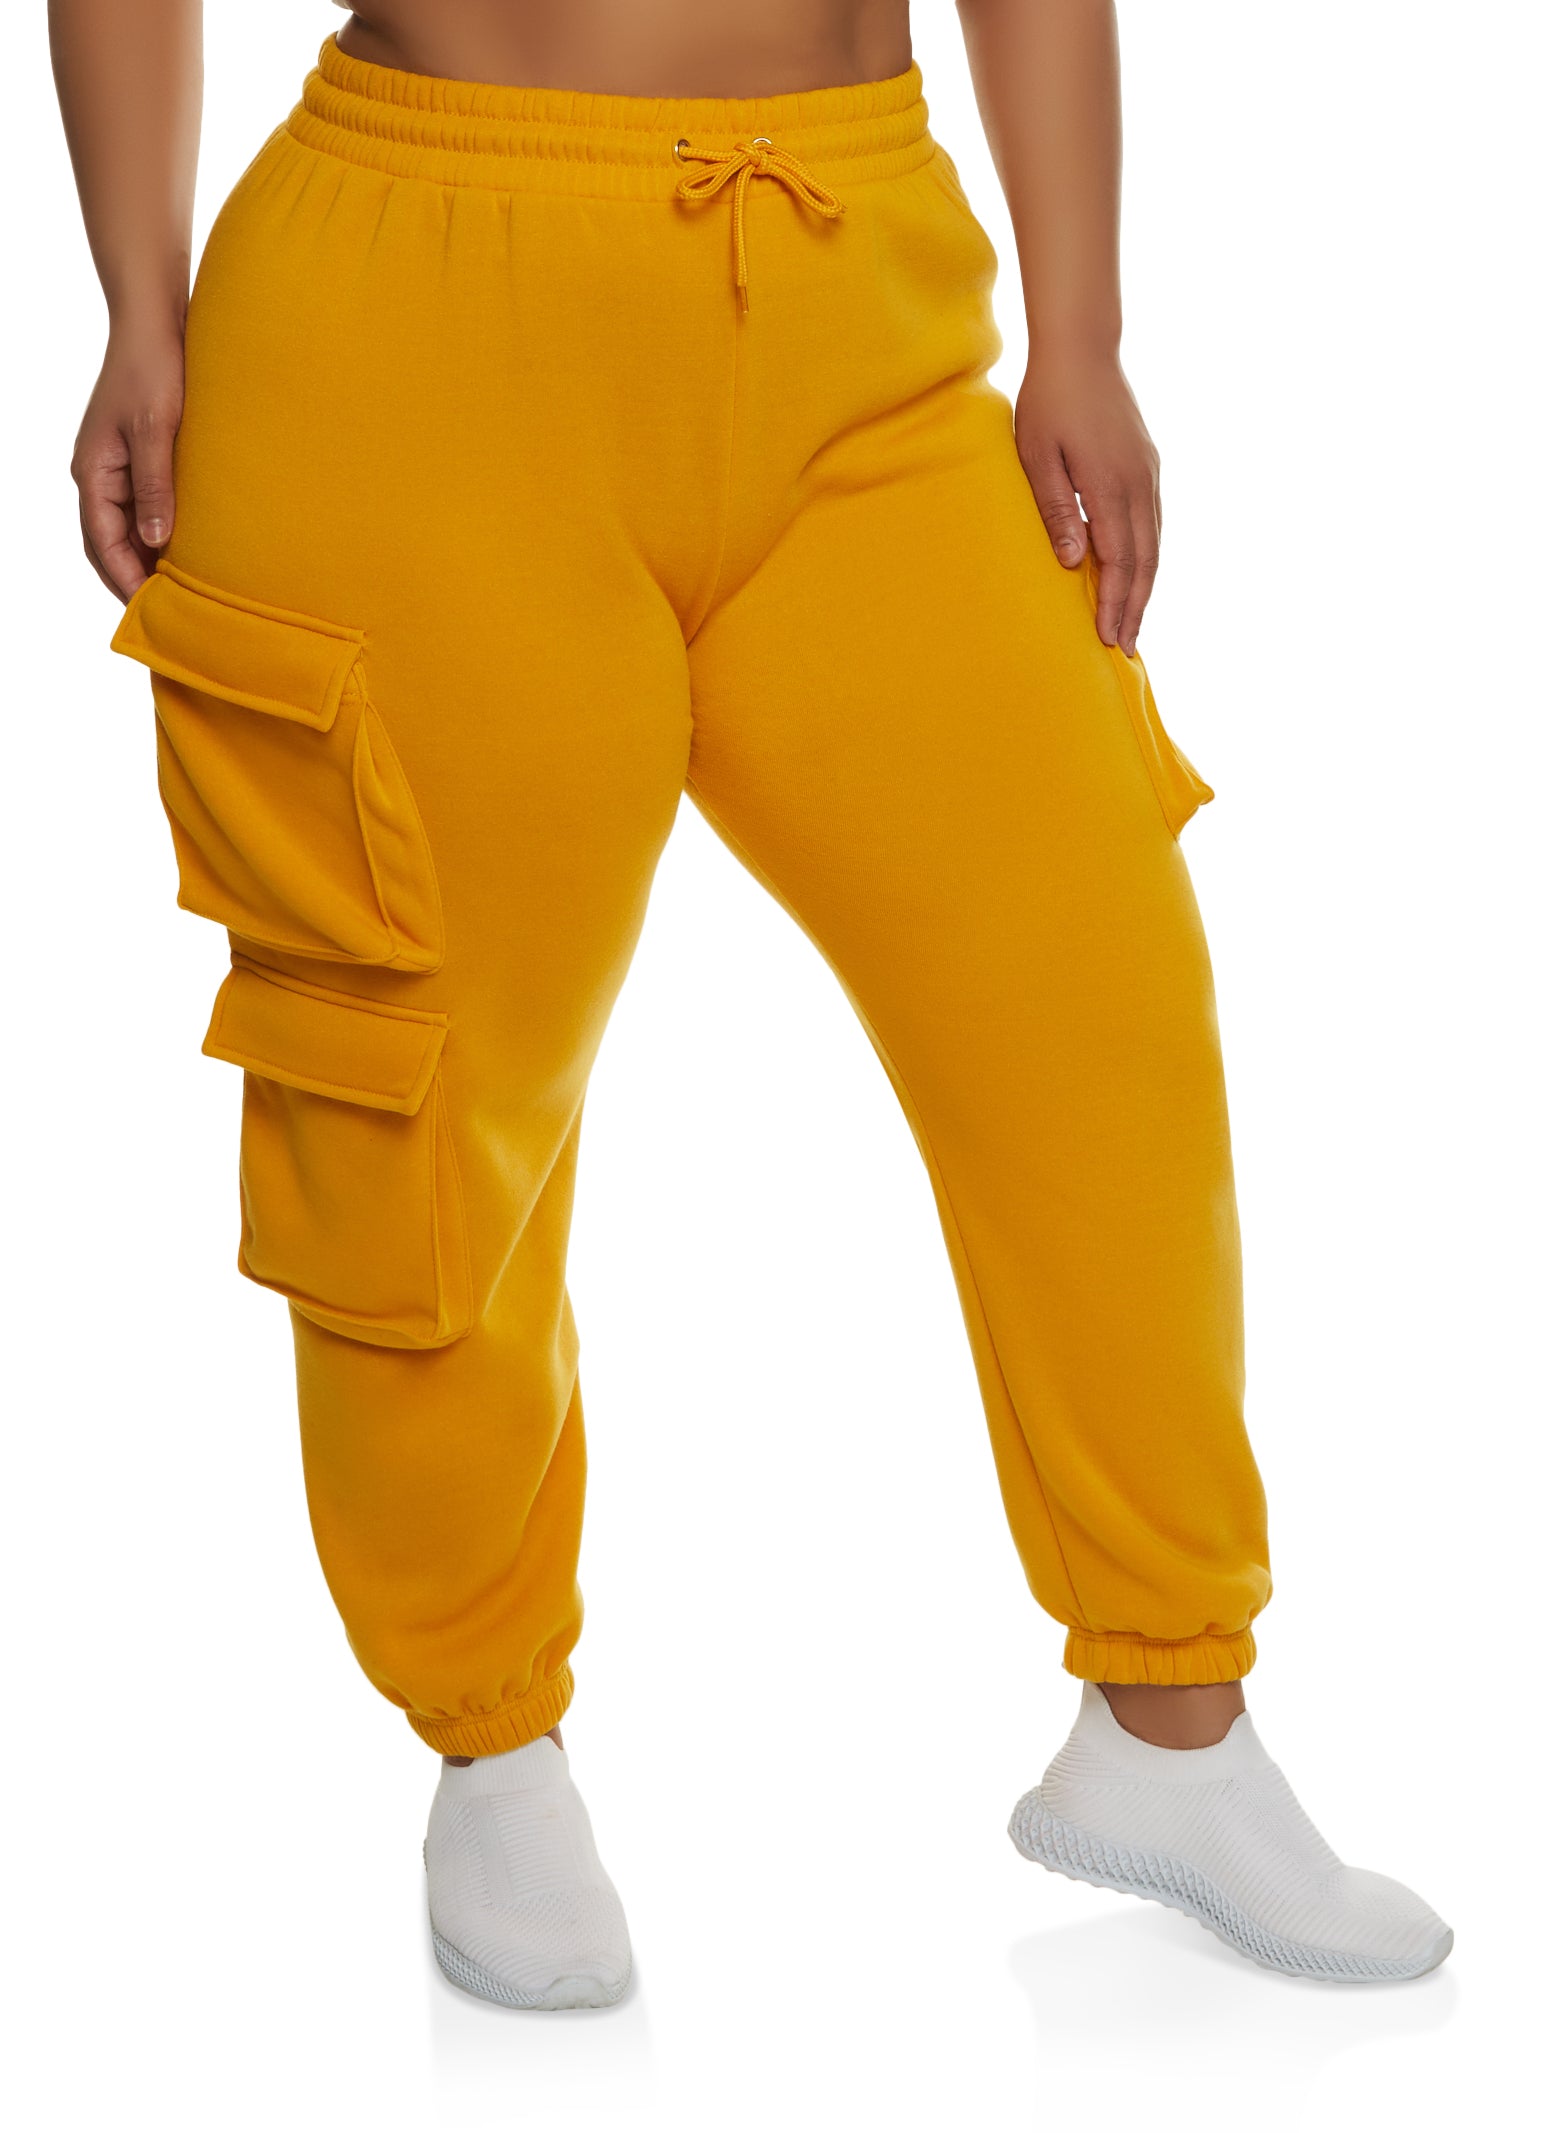 Womens Yellow Pants | Everyday Low Prices | Rainbow